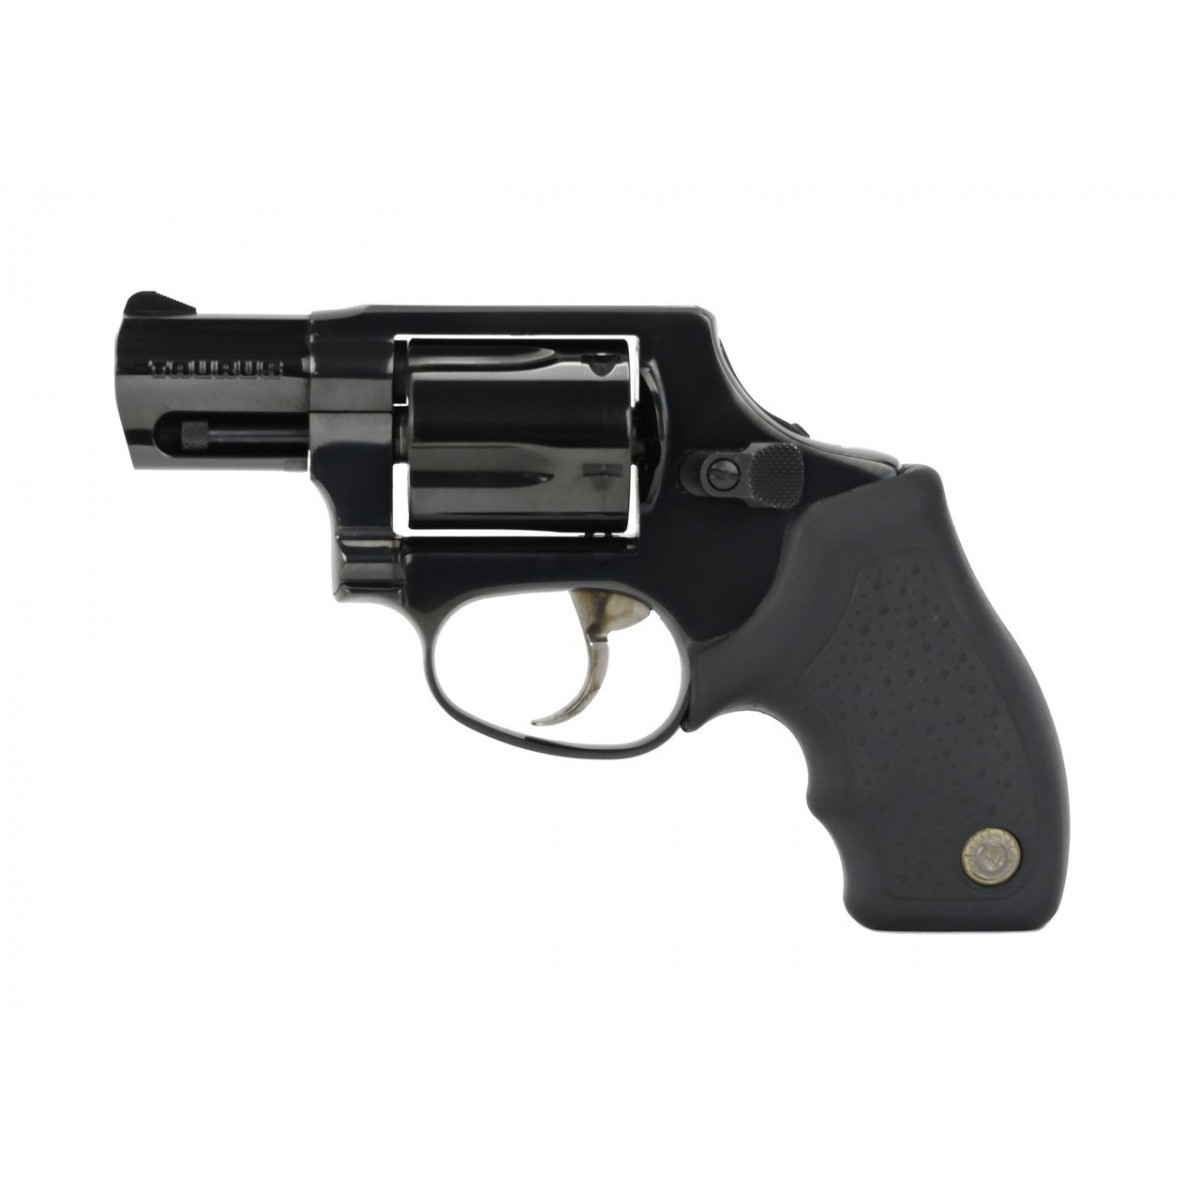 Taurus 85 .38 Special caliber revolver for sale.